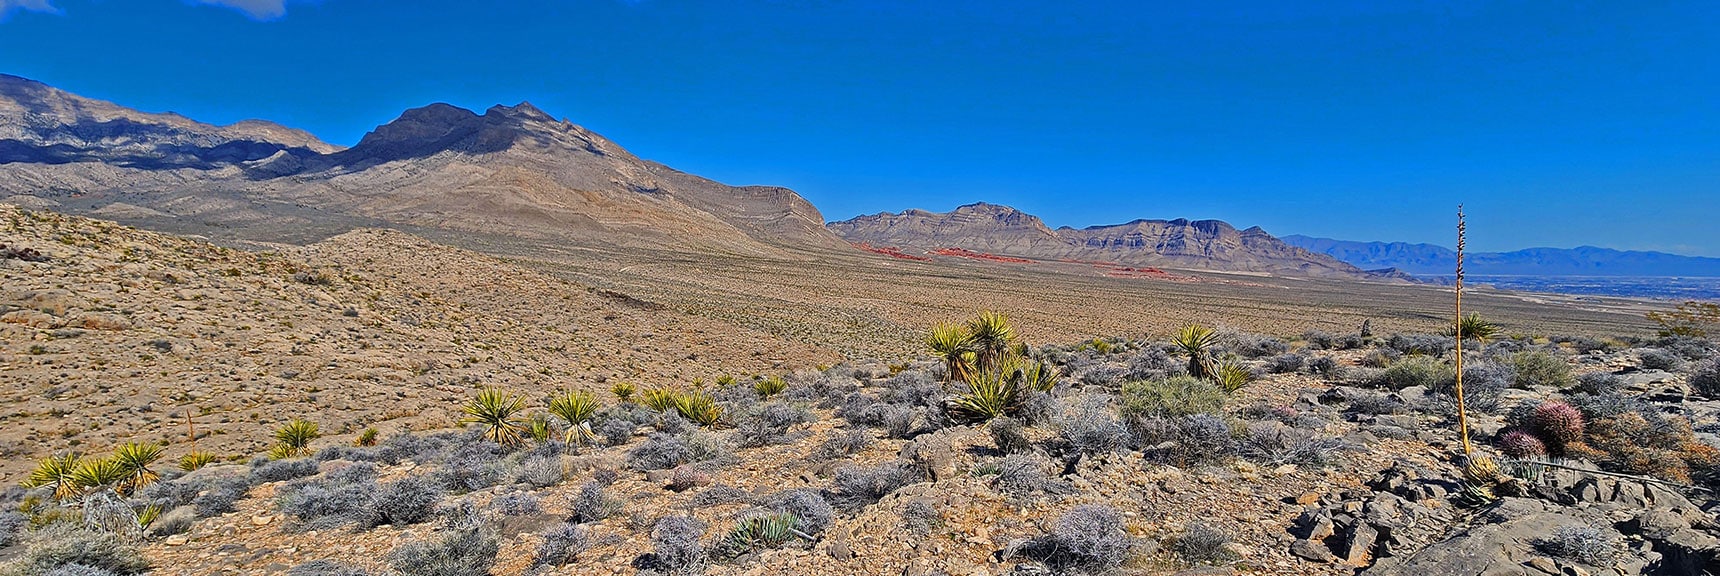 Brownstone Basin to the Right. Damsel Peak and Summerlin Ridge in View. | Gray Cap Ridge Southeast Summit | La Madre Mountains Wilderness, Nevada